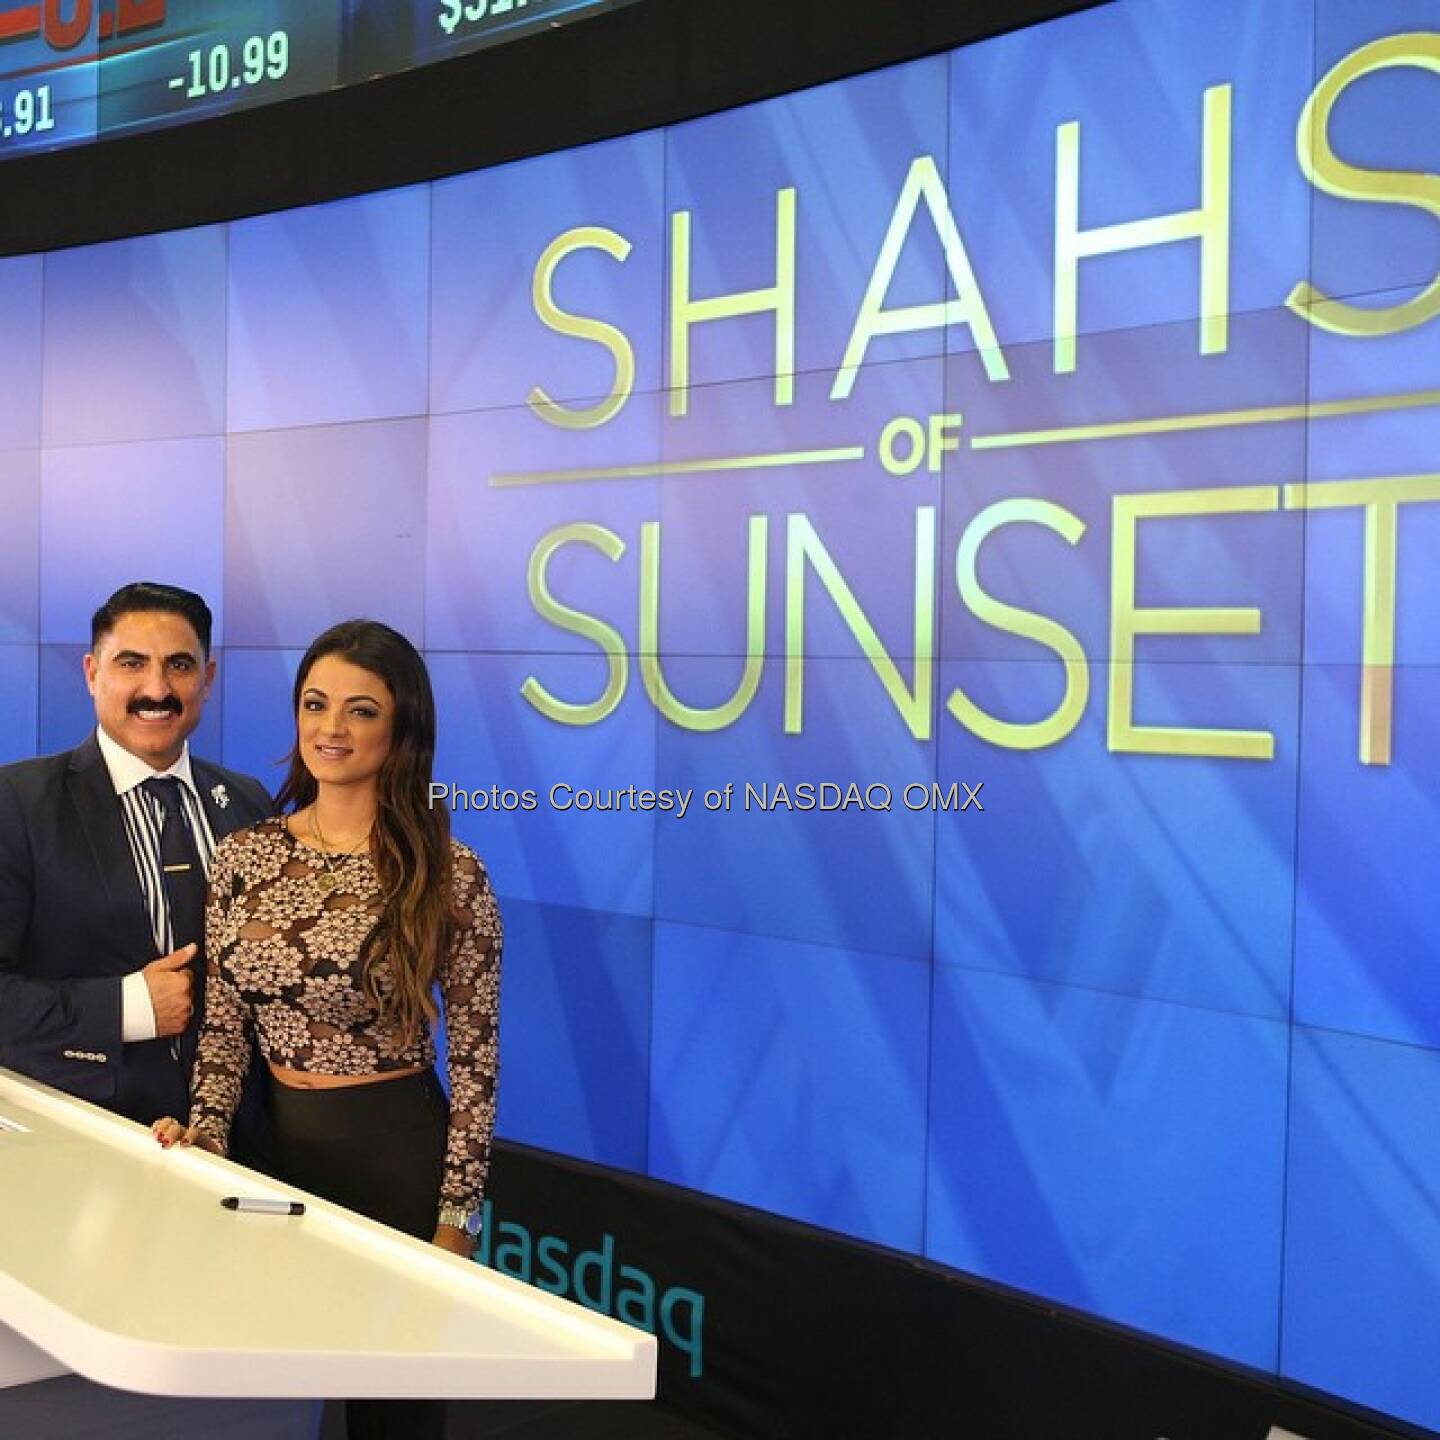 Getting ready for The #Shahs of Sunset to ring the @Nasdaq Closing Bell! @RezaFarahan @GolnesaGG @bravotv  Source: http://facebook.com/NASDAQ